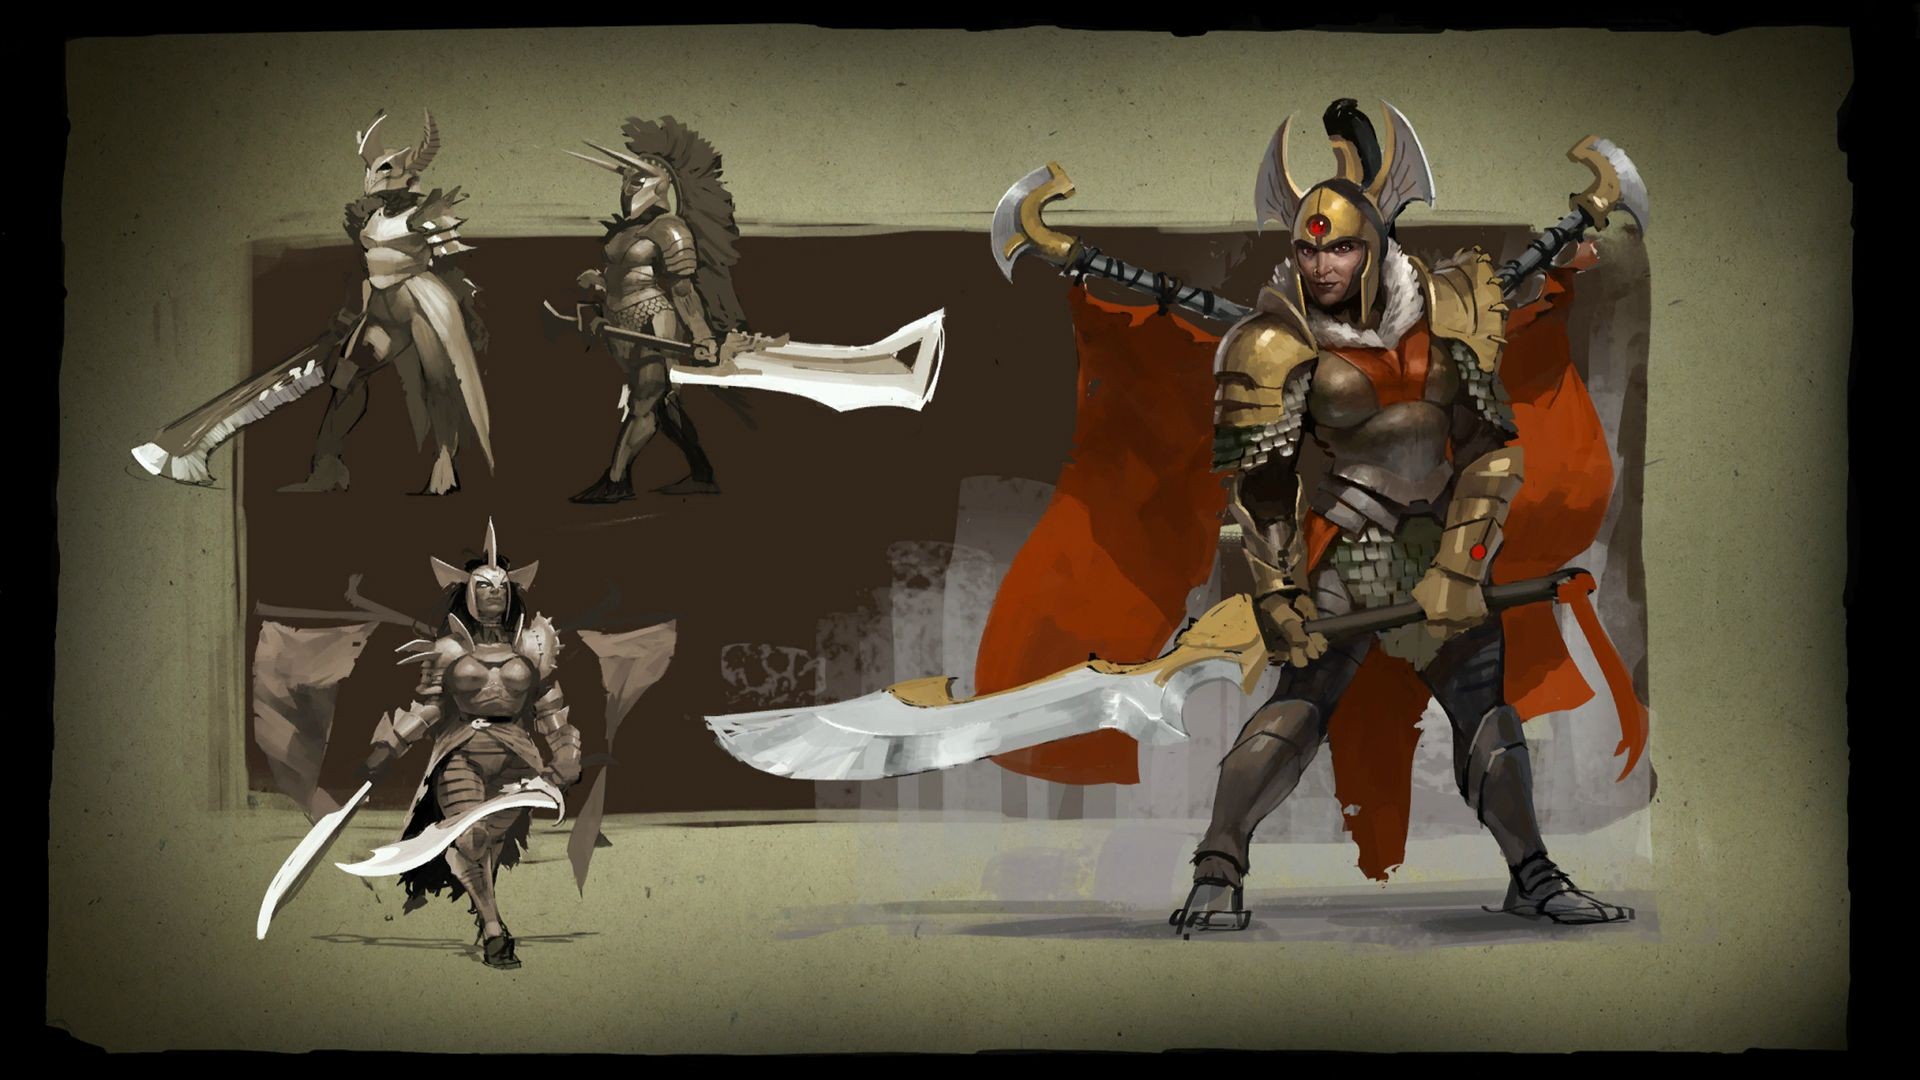 Defense Of The Ancient Dota Dota 2 Valve Valve Corporation Video Games Online Games Legion Commander 1920x1080